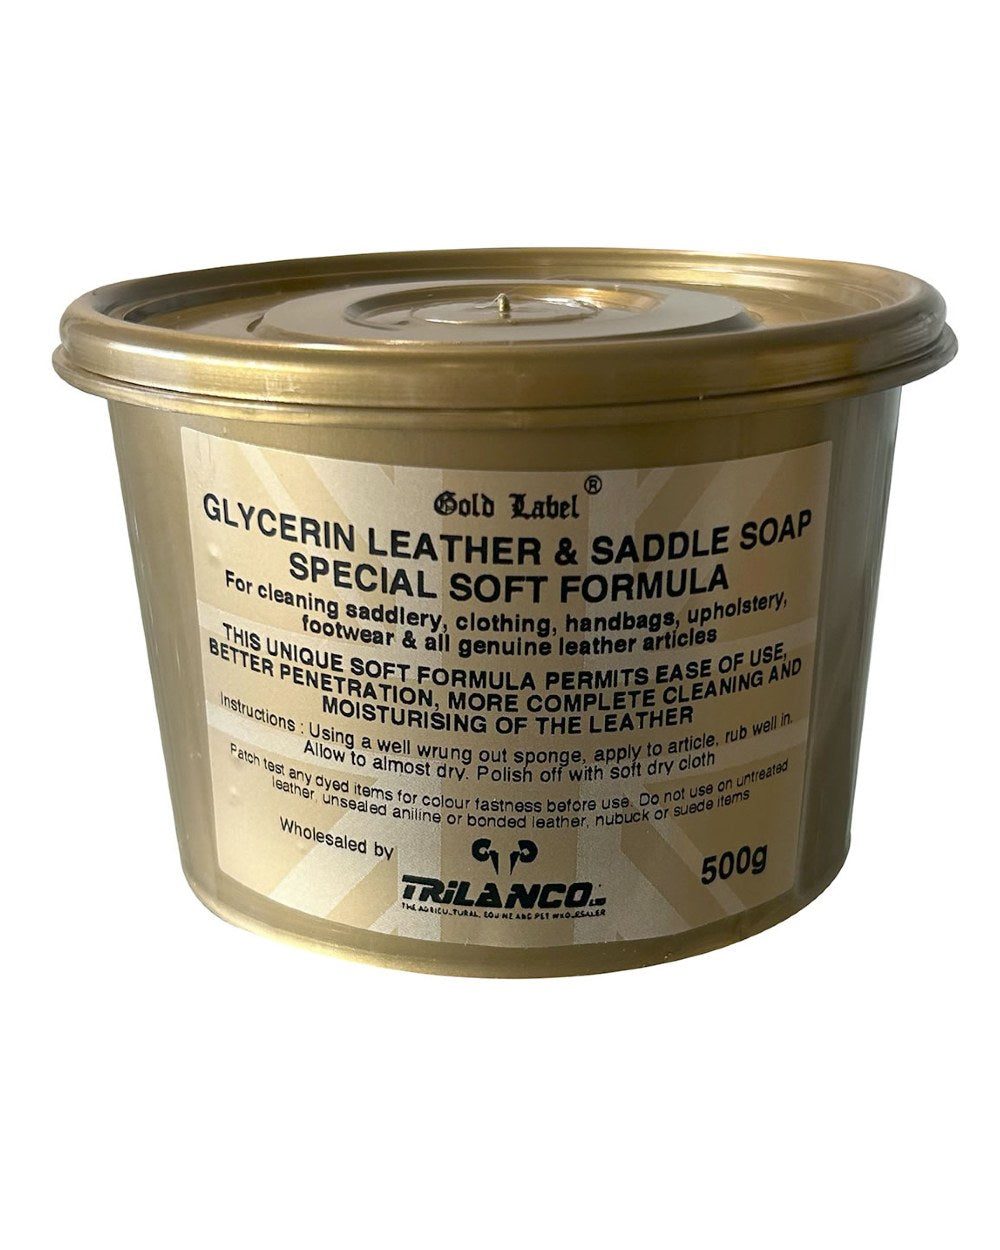 Gold Label Glycerin Leather And Saddle Soap Soft Formula 500g on white background